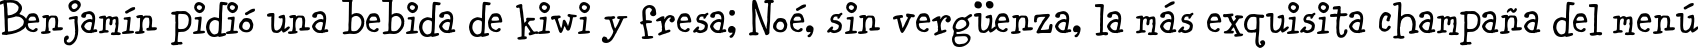 Пример написания шрифтом Carnation текста на испанском